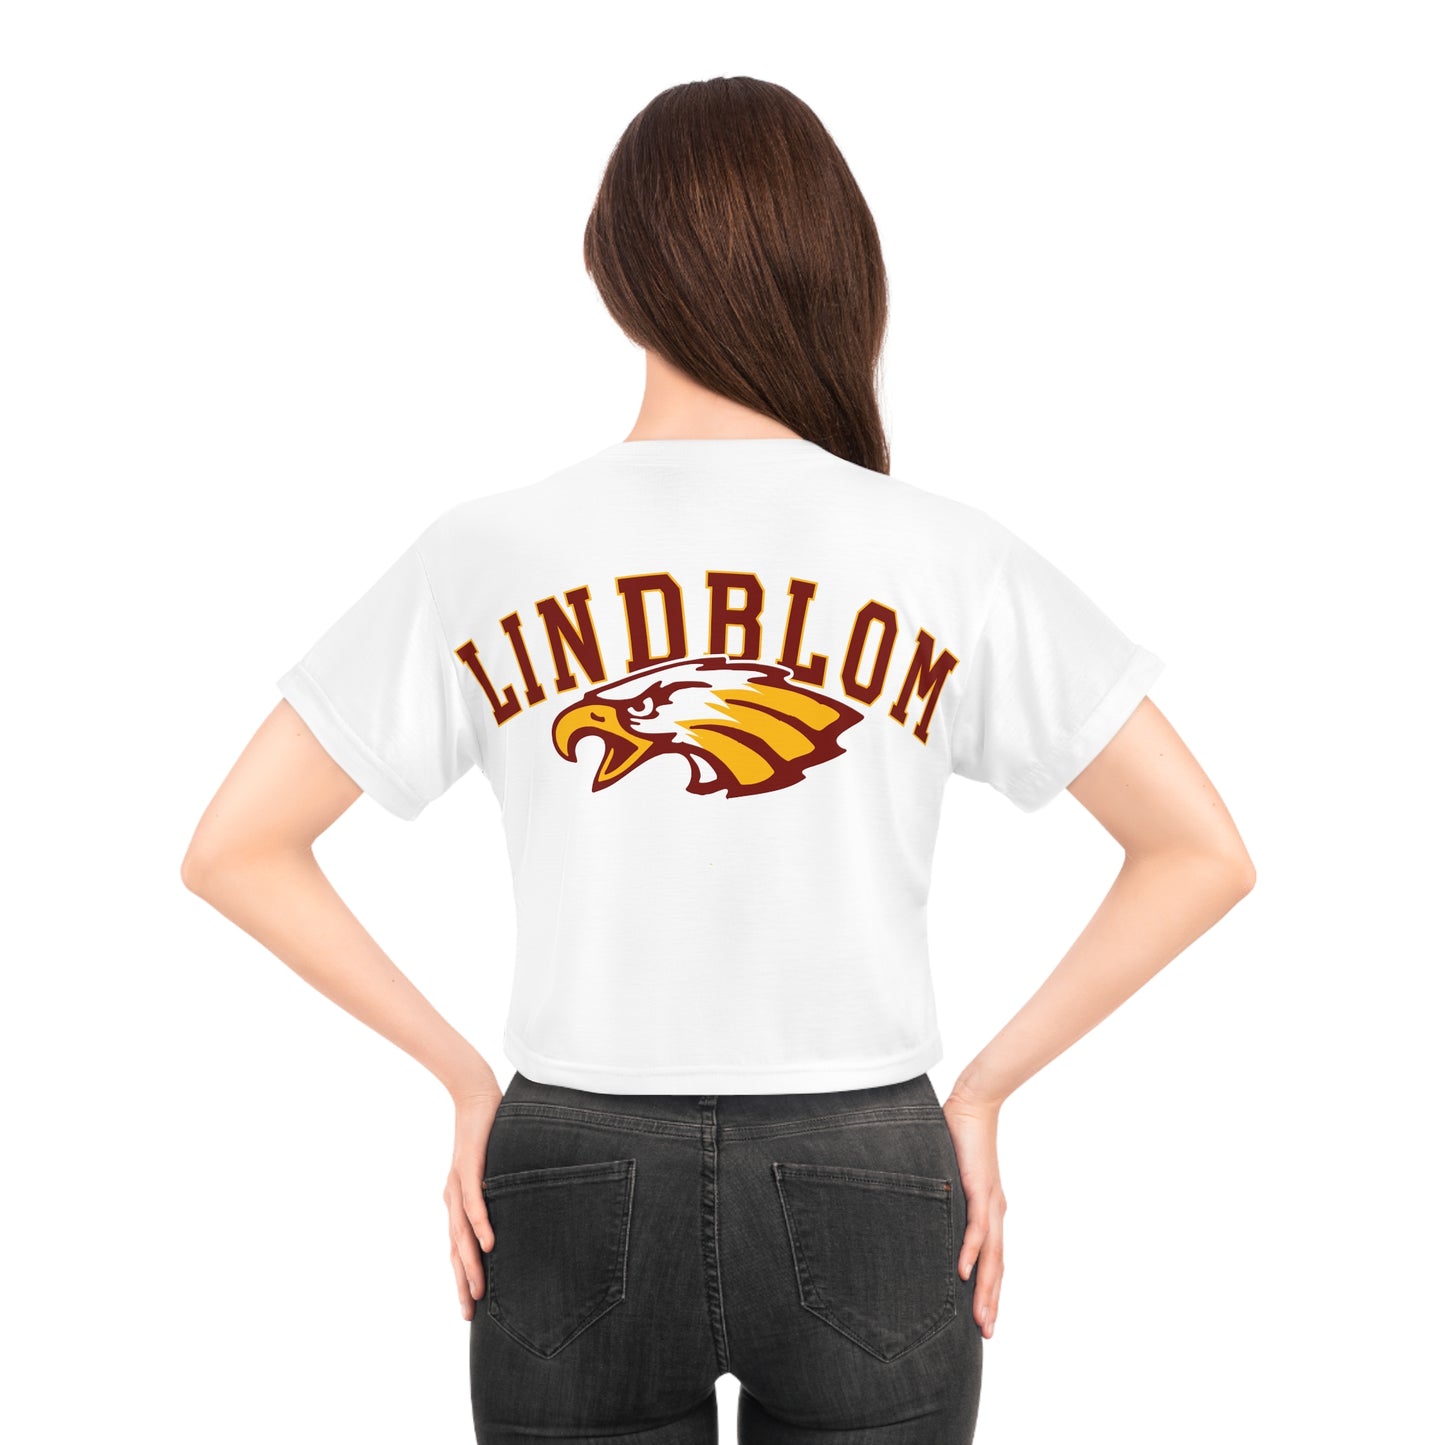 Lindblom Eagles | Lindblom Math and Science Academy Crop Top